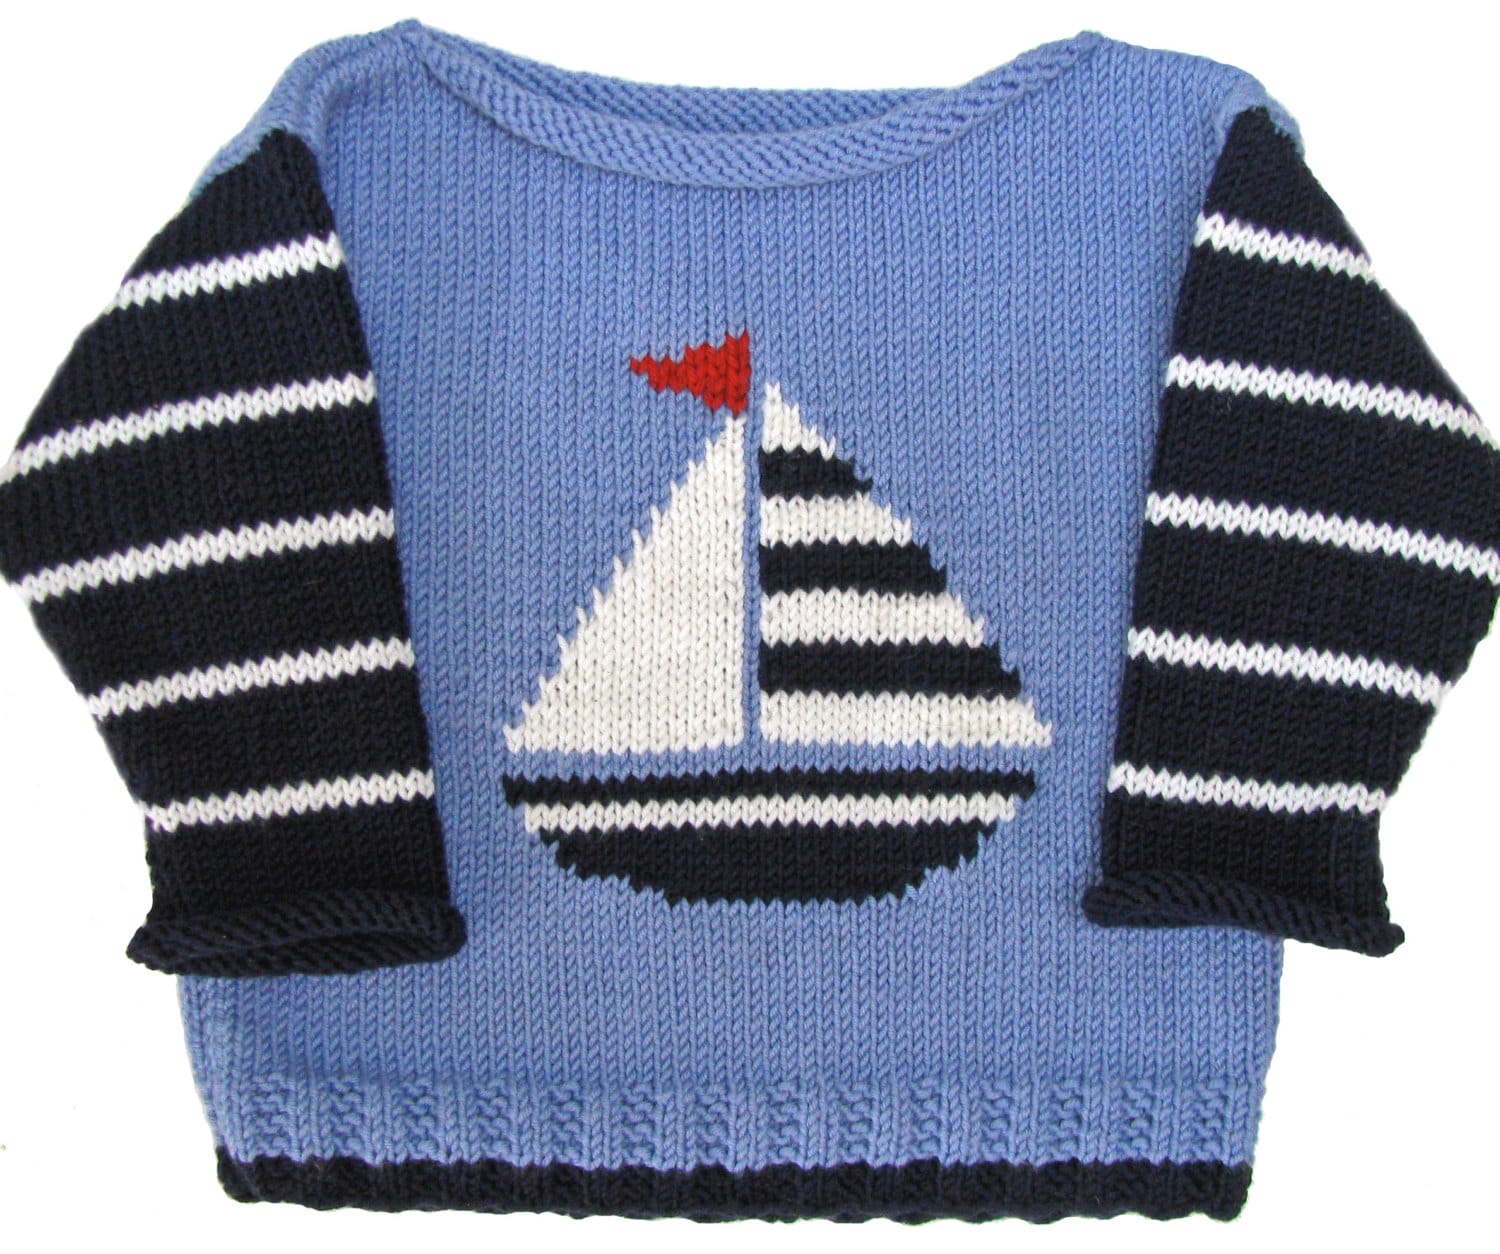 free sailboat knitting pattern